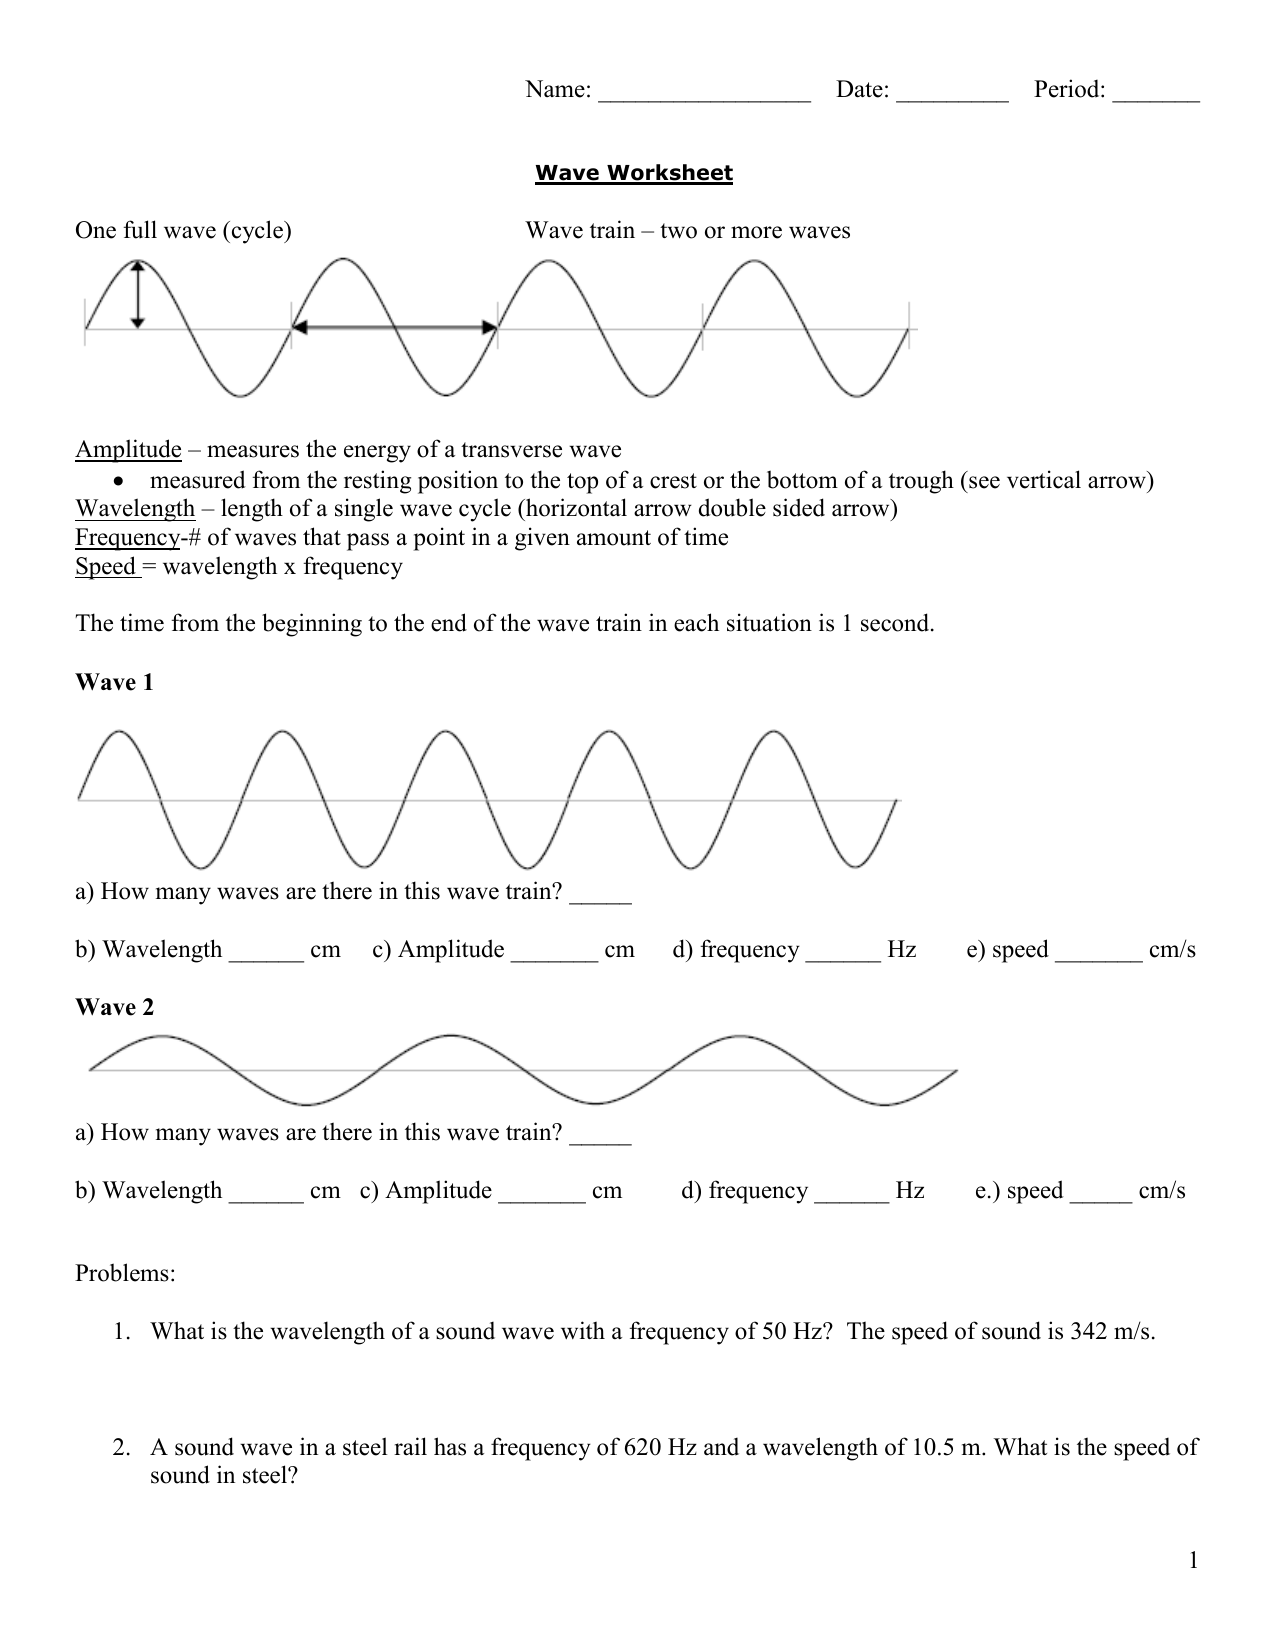 Wave Worksheet Intended For Waves Worksheet 1 Answers